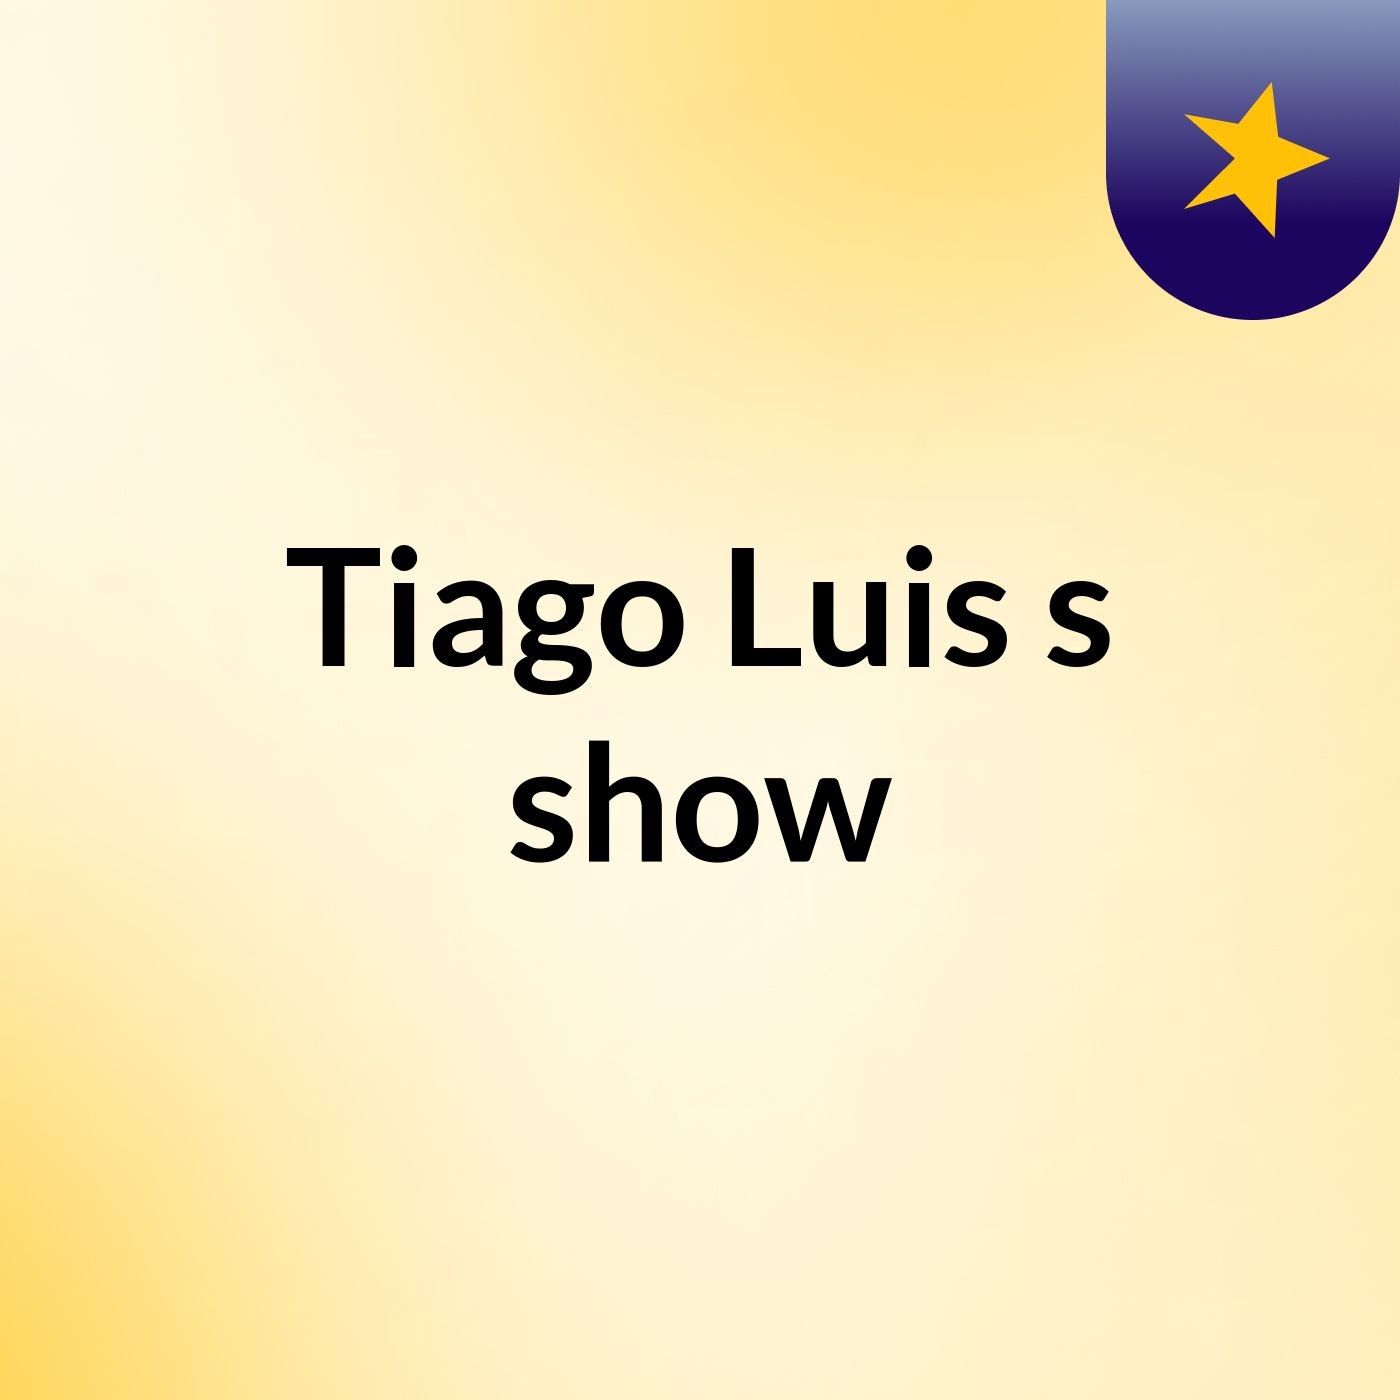 Tiago Luis's show